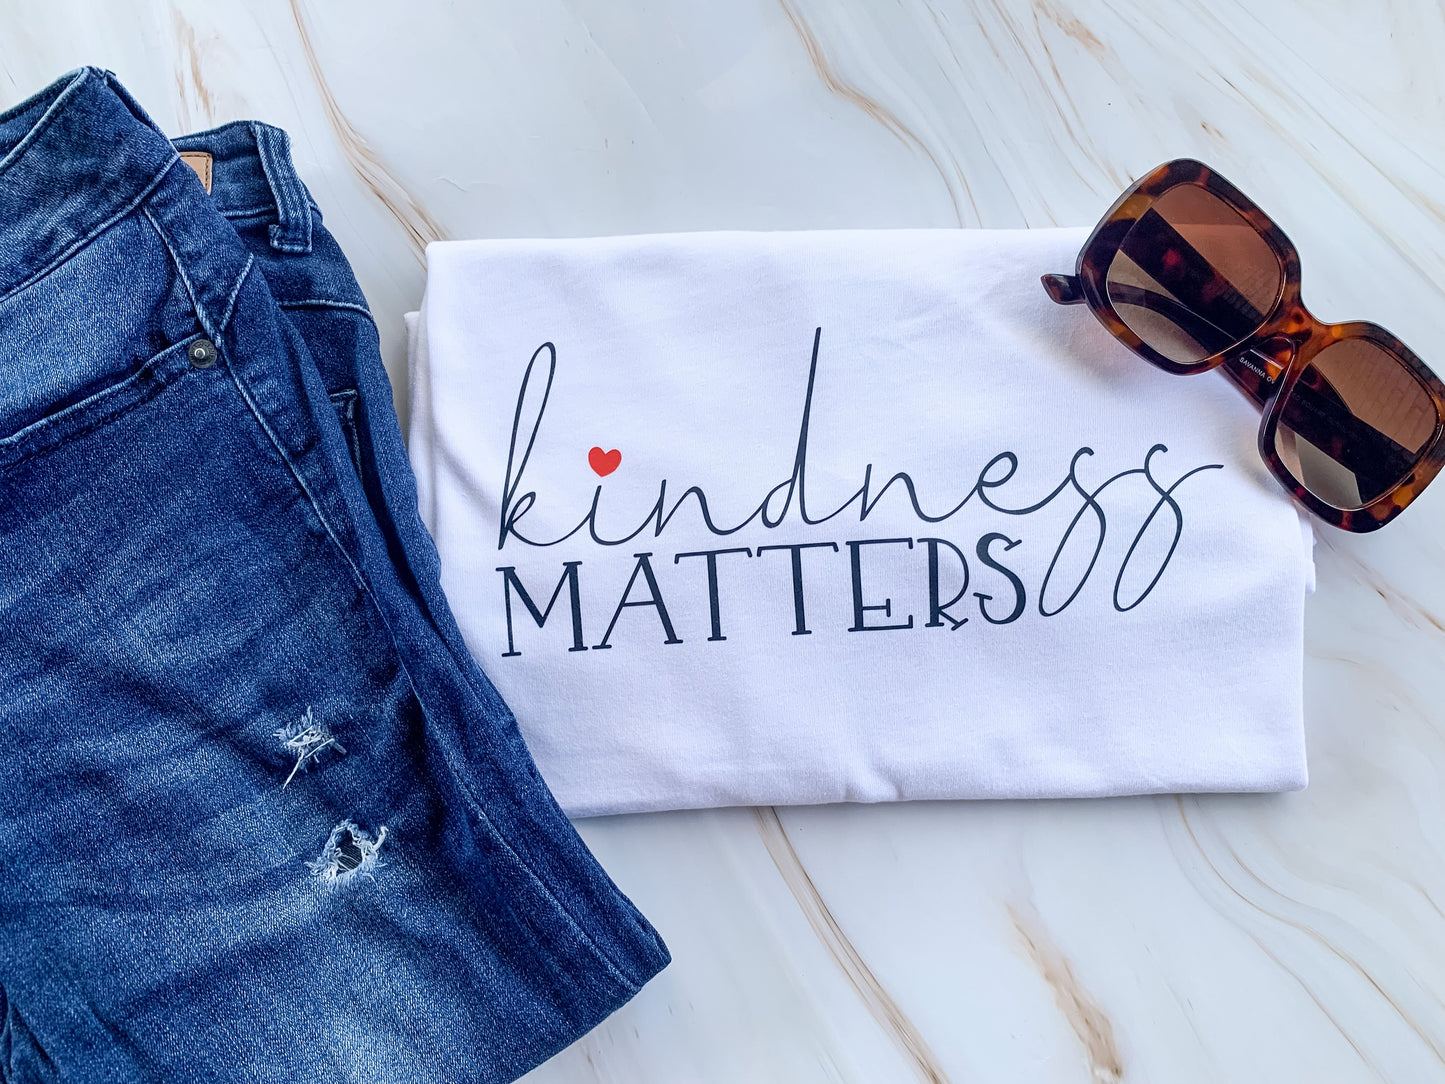 Kindness Matters Printed Unisex T-Shirt